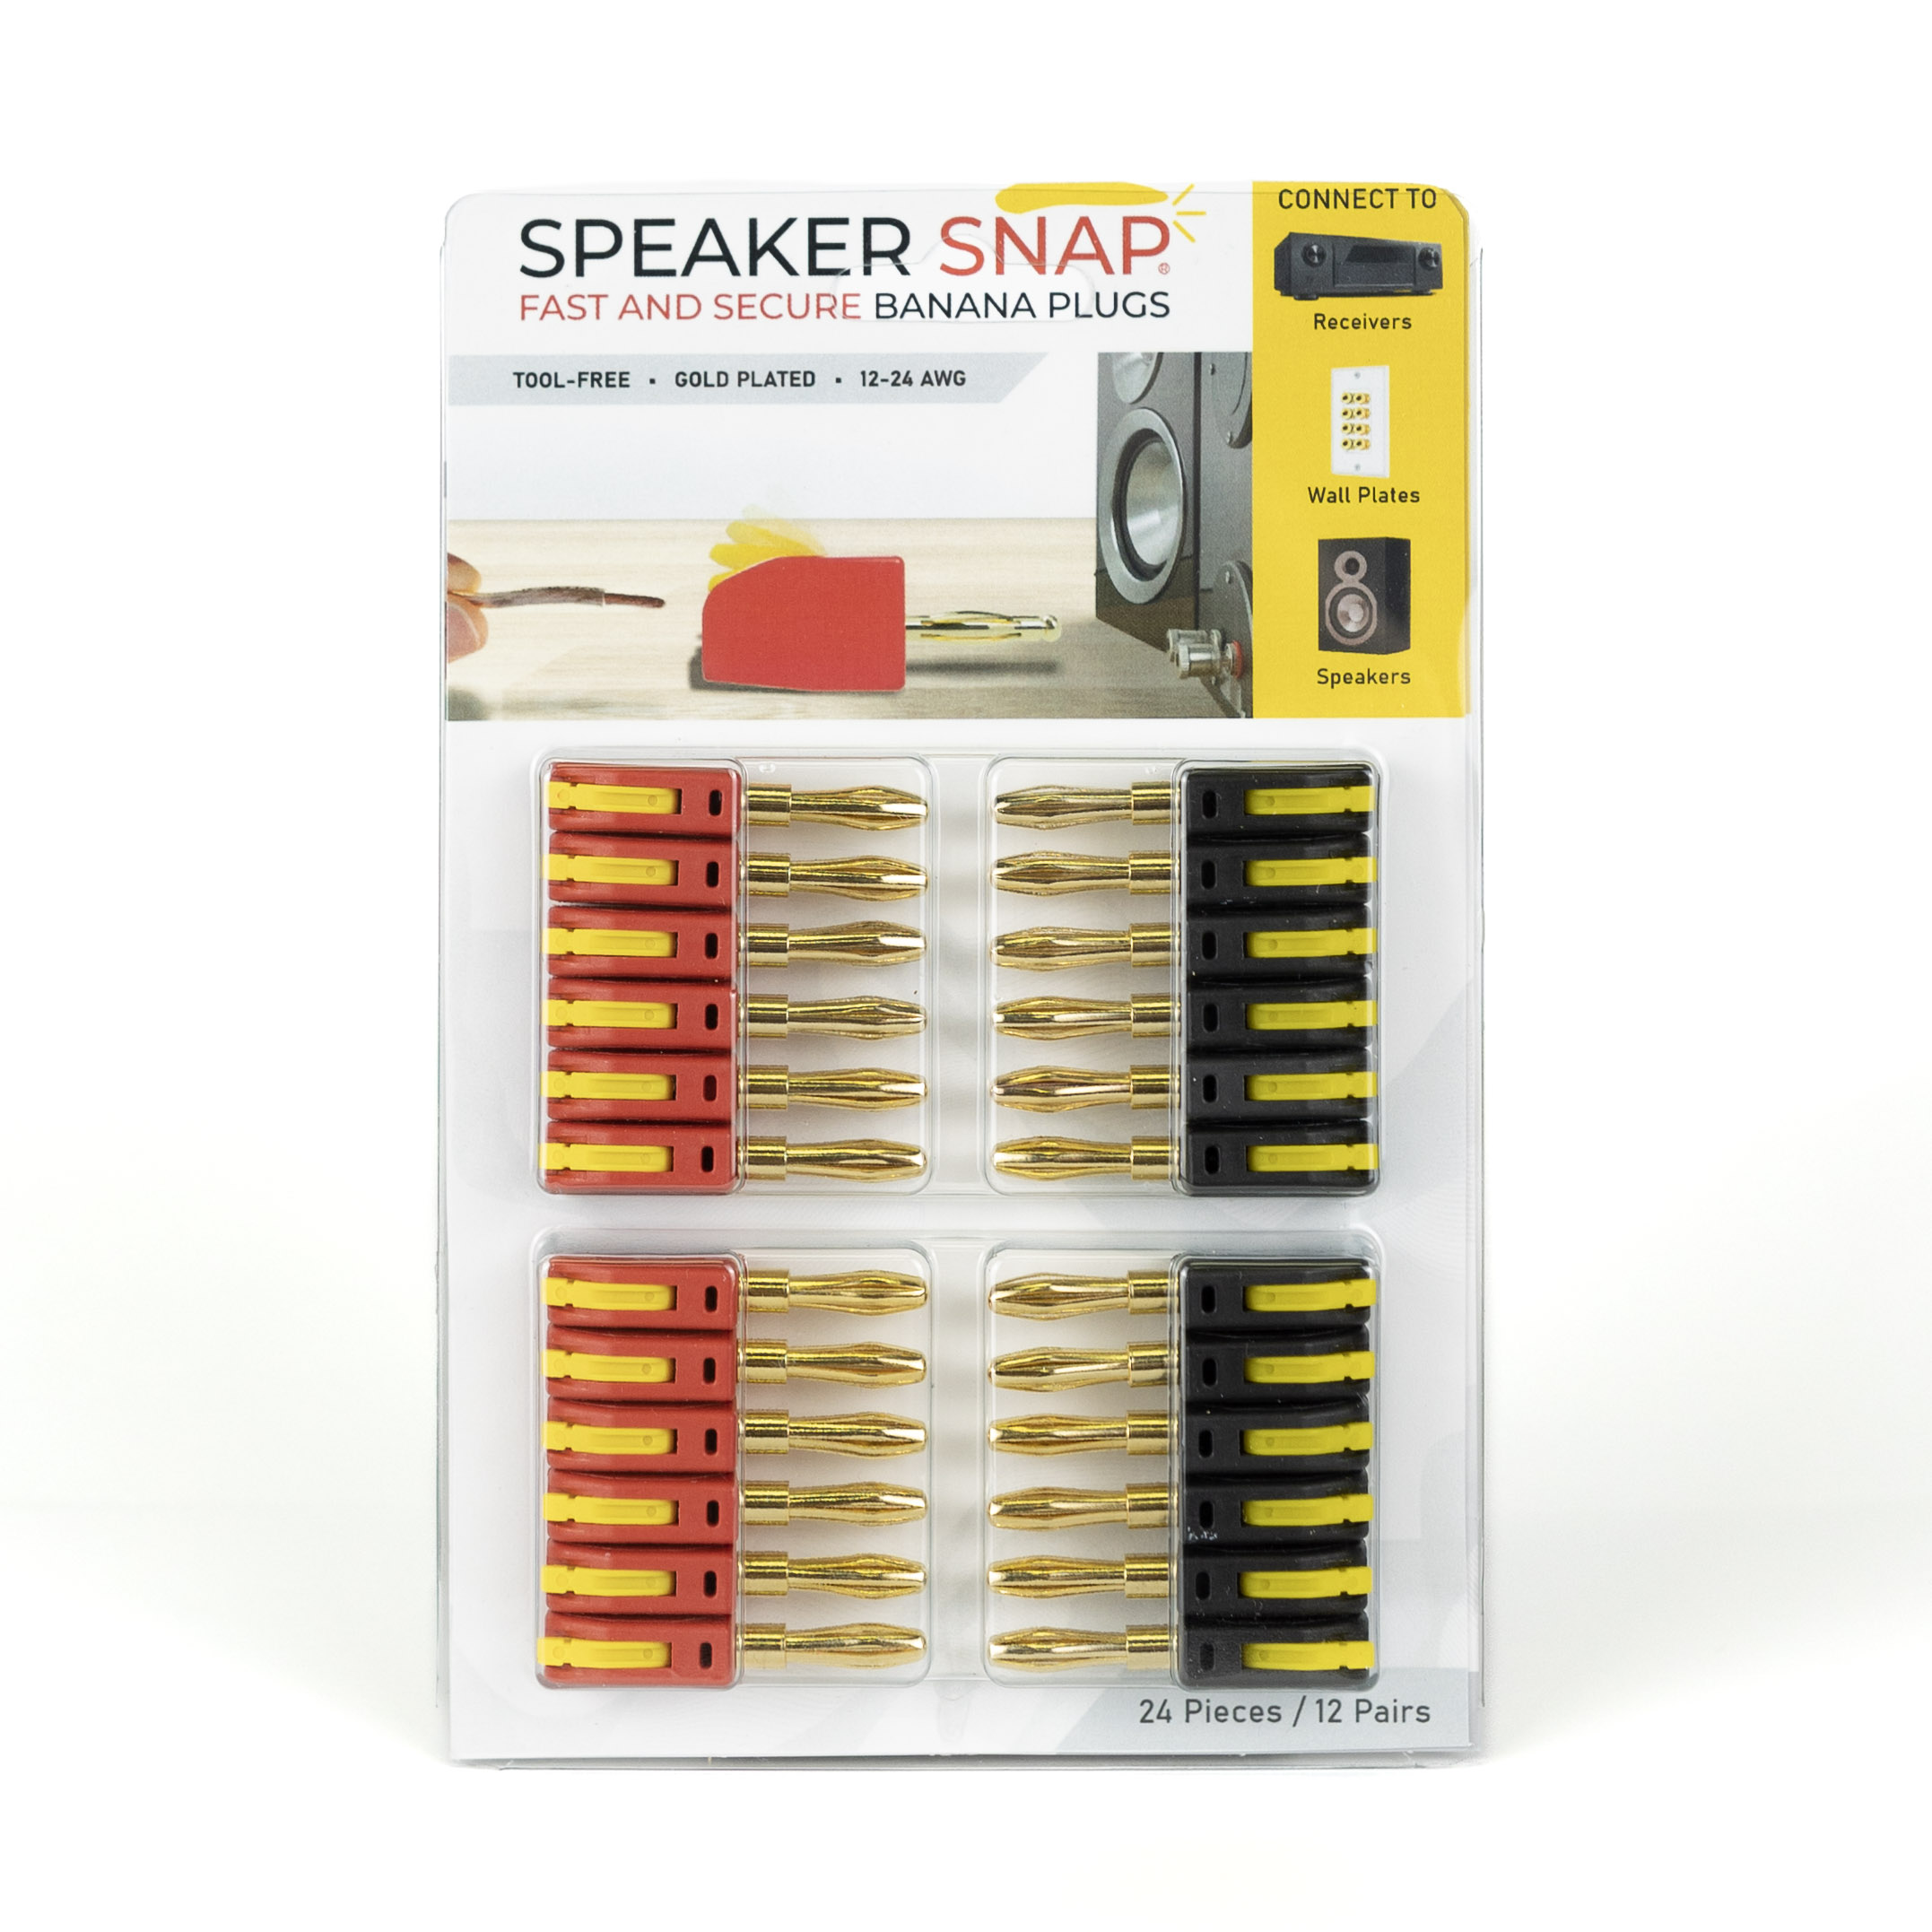 Speakersnap 12 pairs / 24 pieces